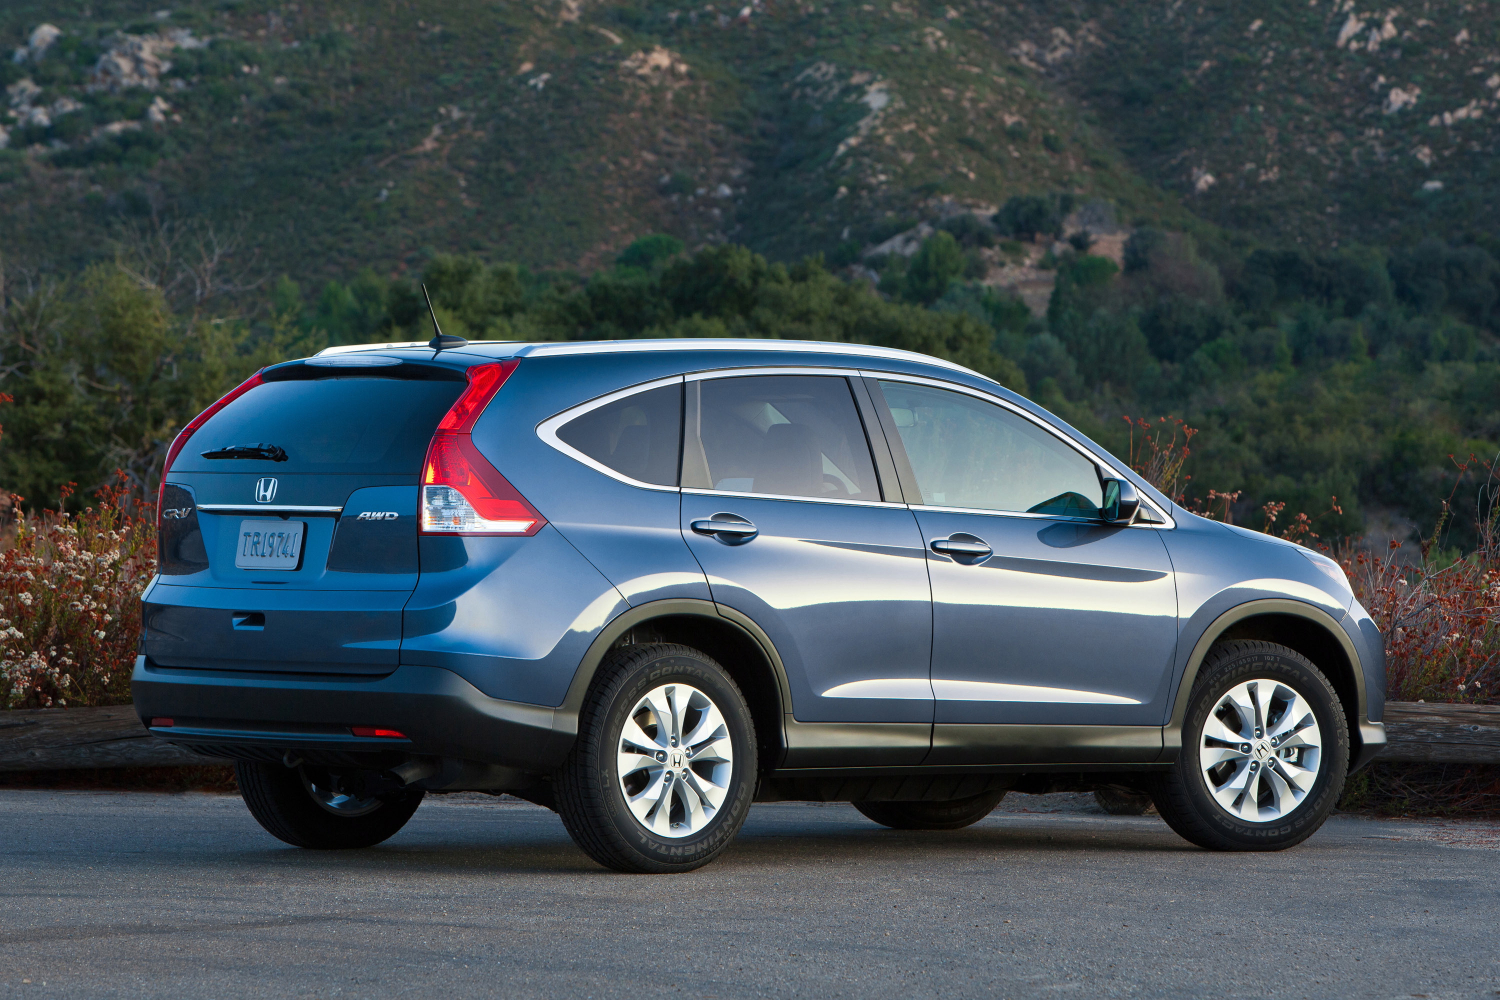 Reliable used SUVs under $15,000 like the 2013 Honda CR-V